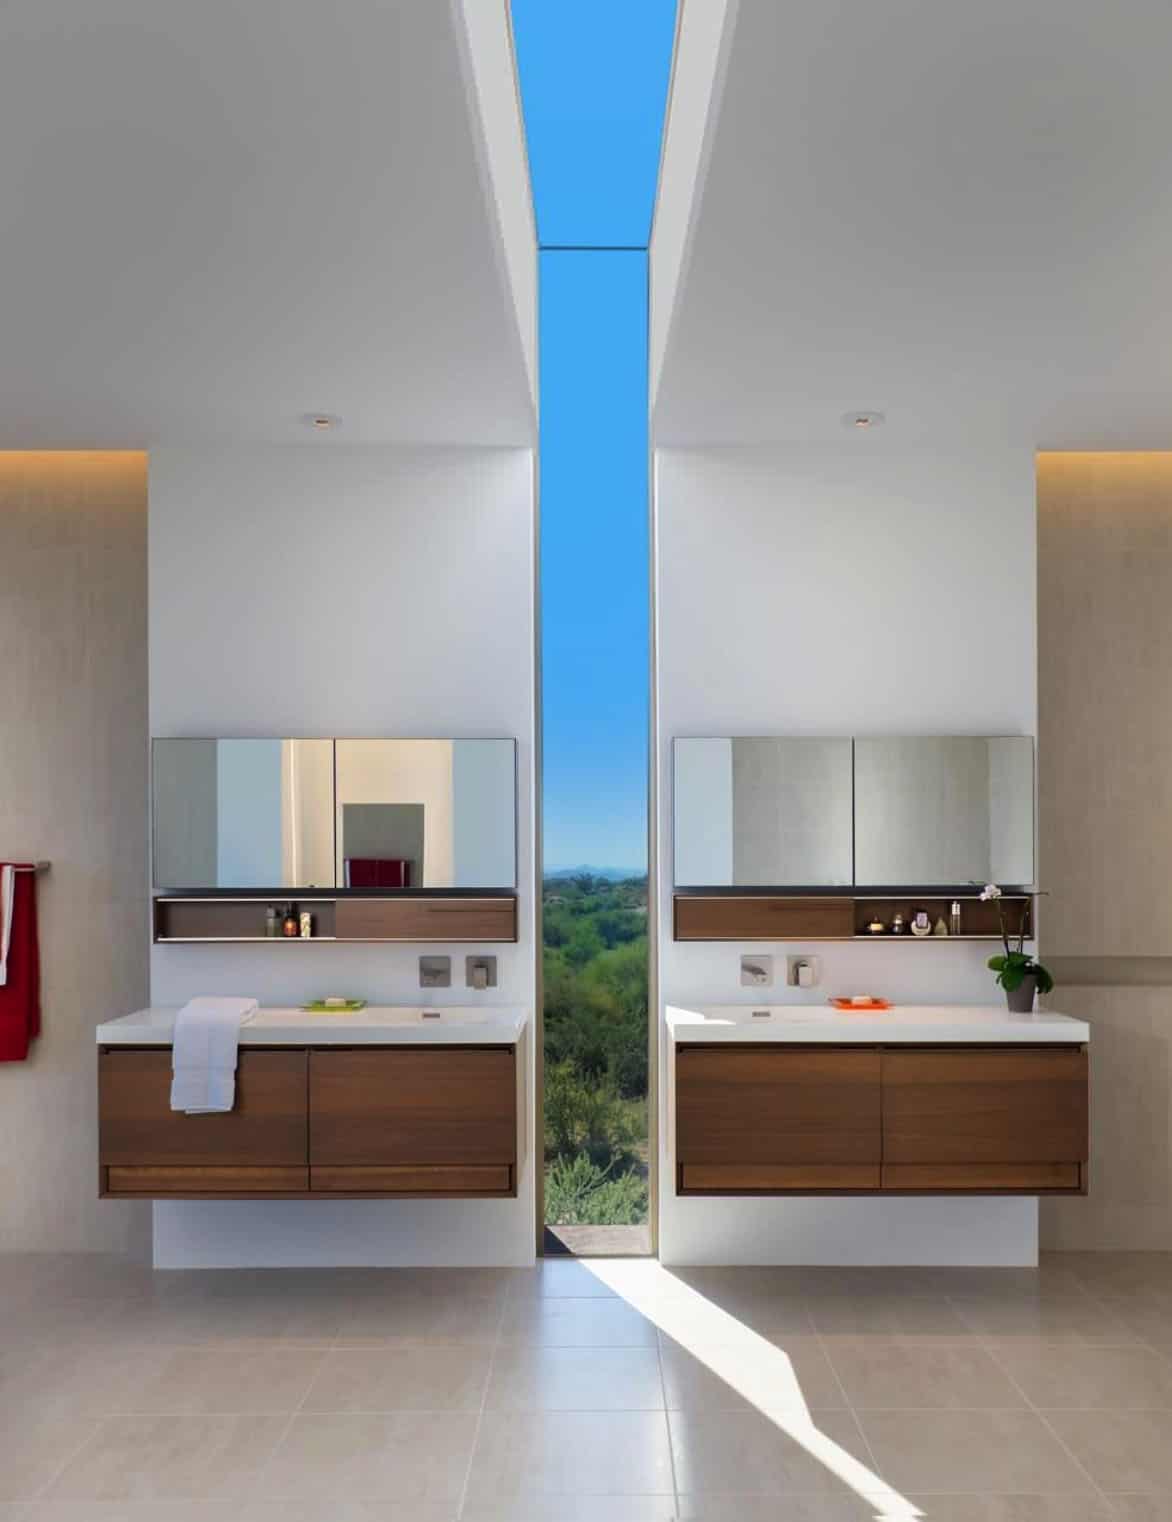 master-bathroom-with-floating-vanity